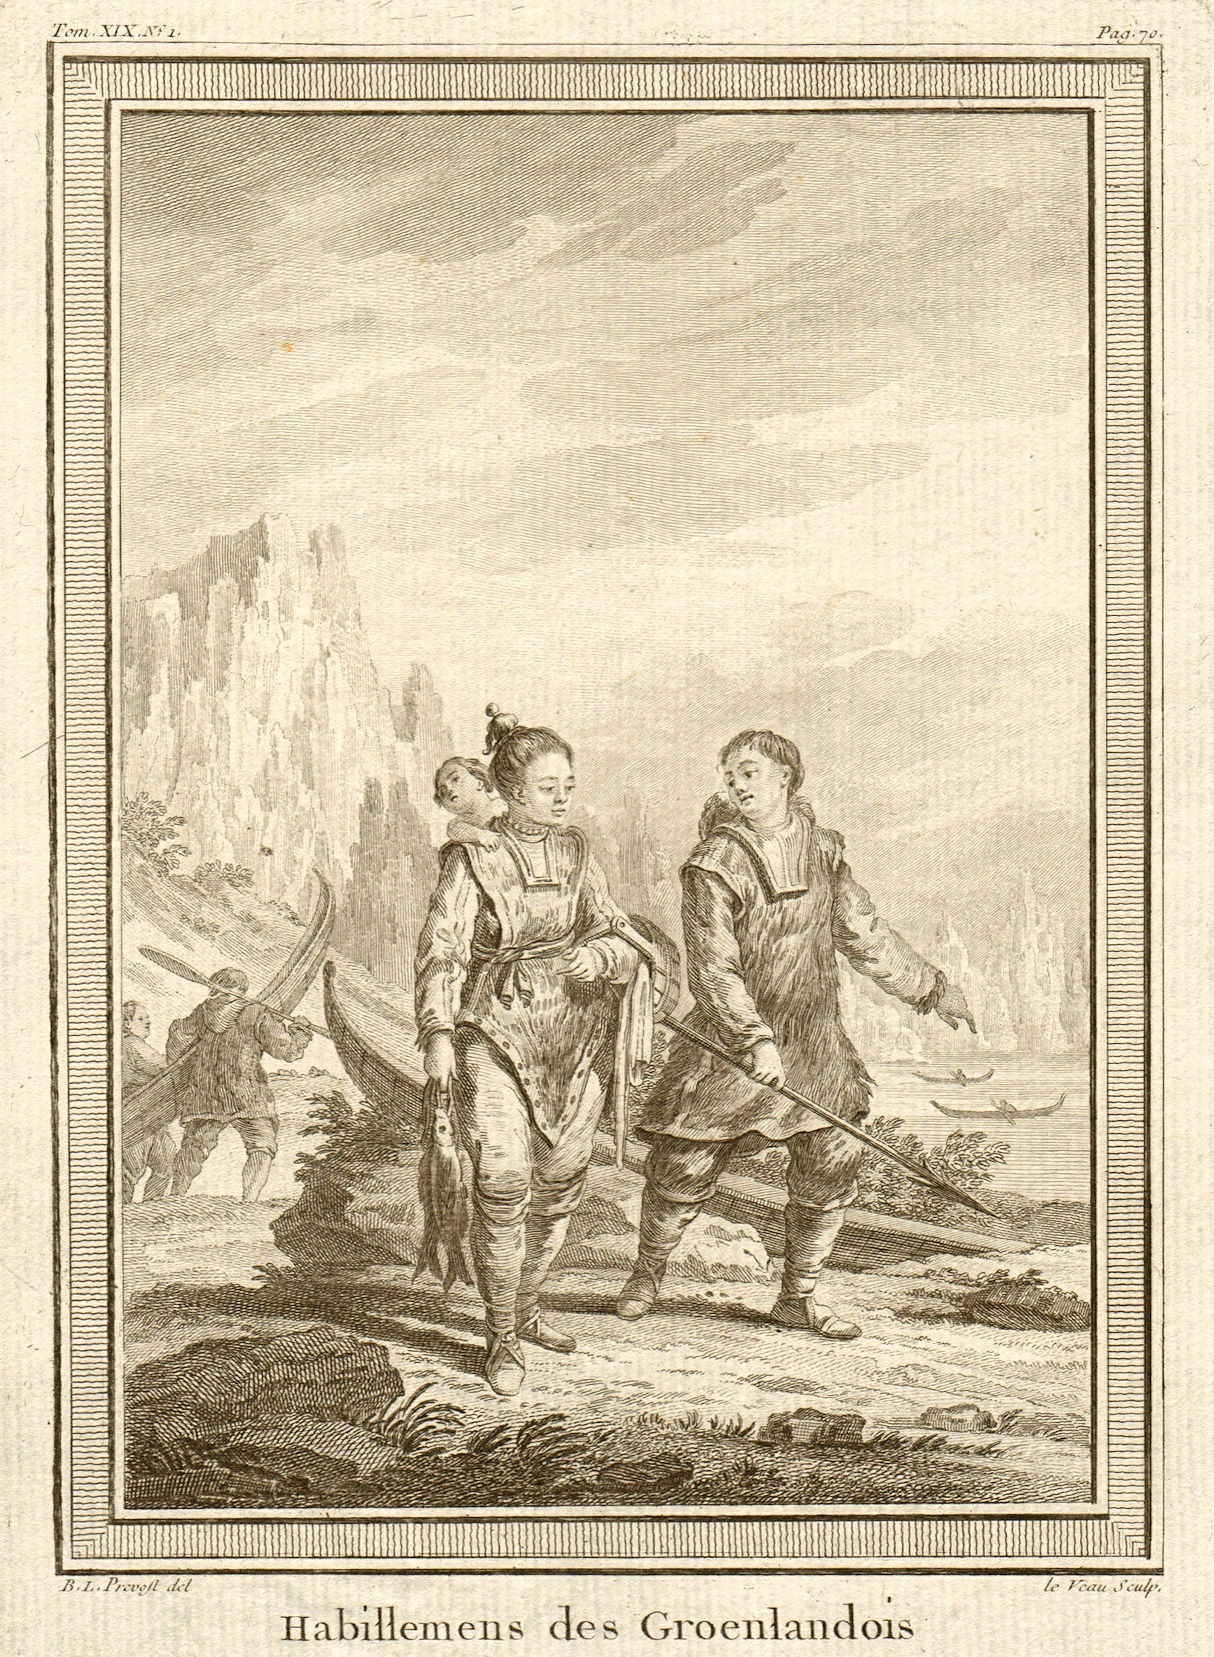 Associate Product 'Habillements des Groenlandois'. Dress of Greenlanders 1770 old antique print